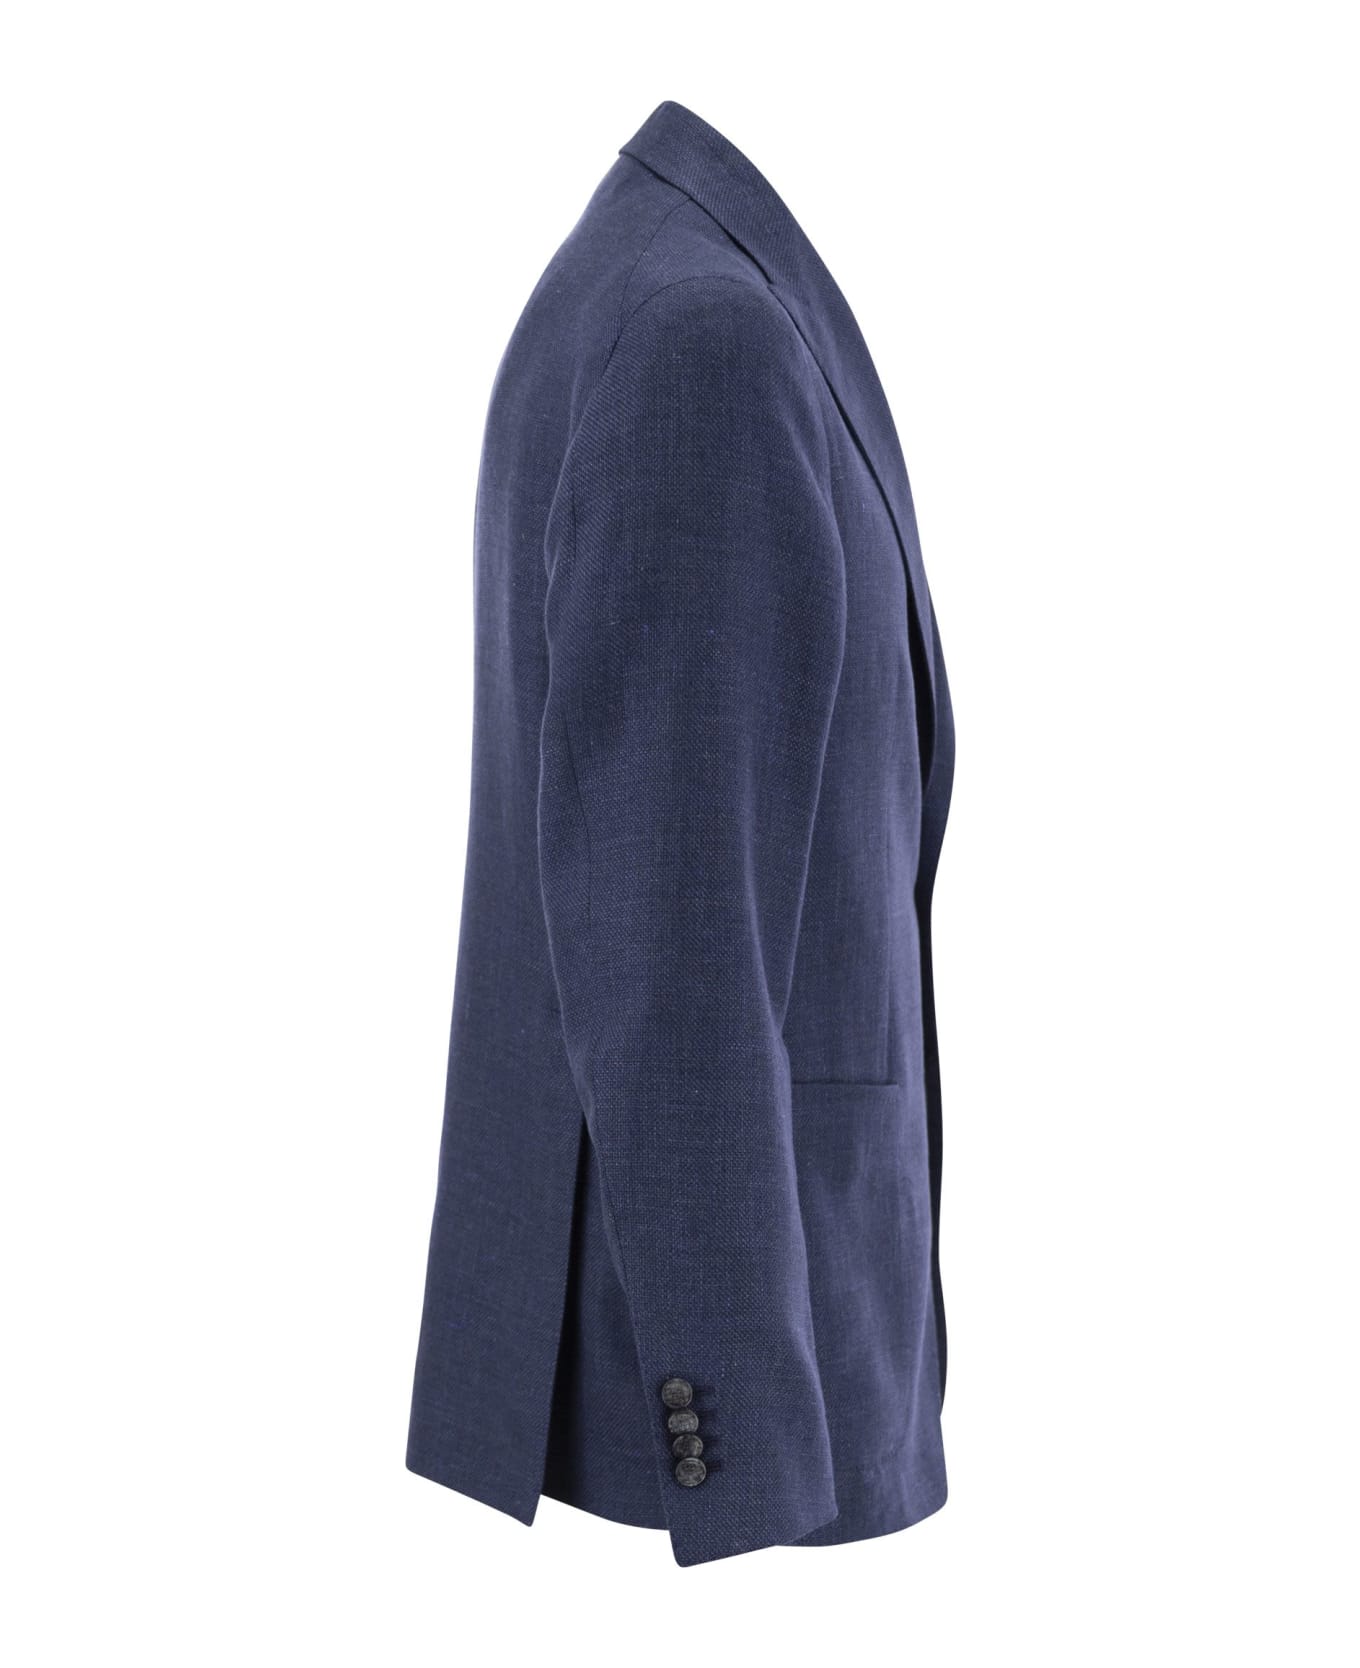 Tagliatore Linen And Virgin Wool Two-button Jacket - Avio スーツ